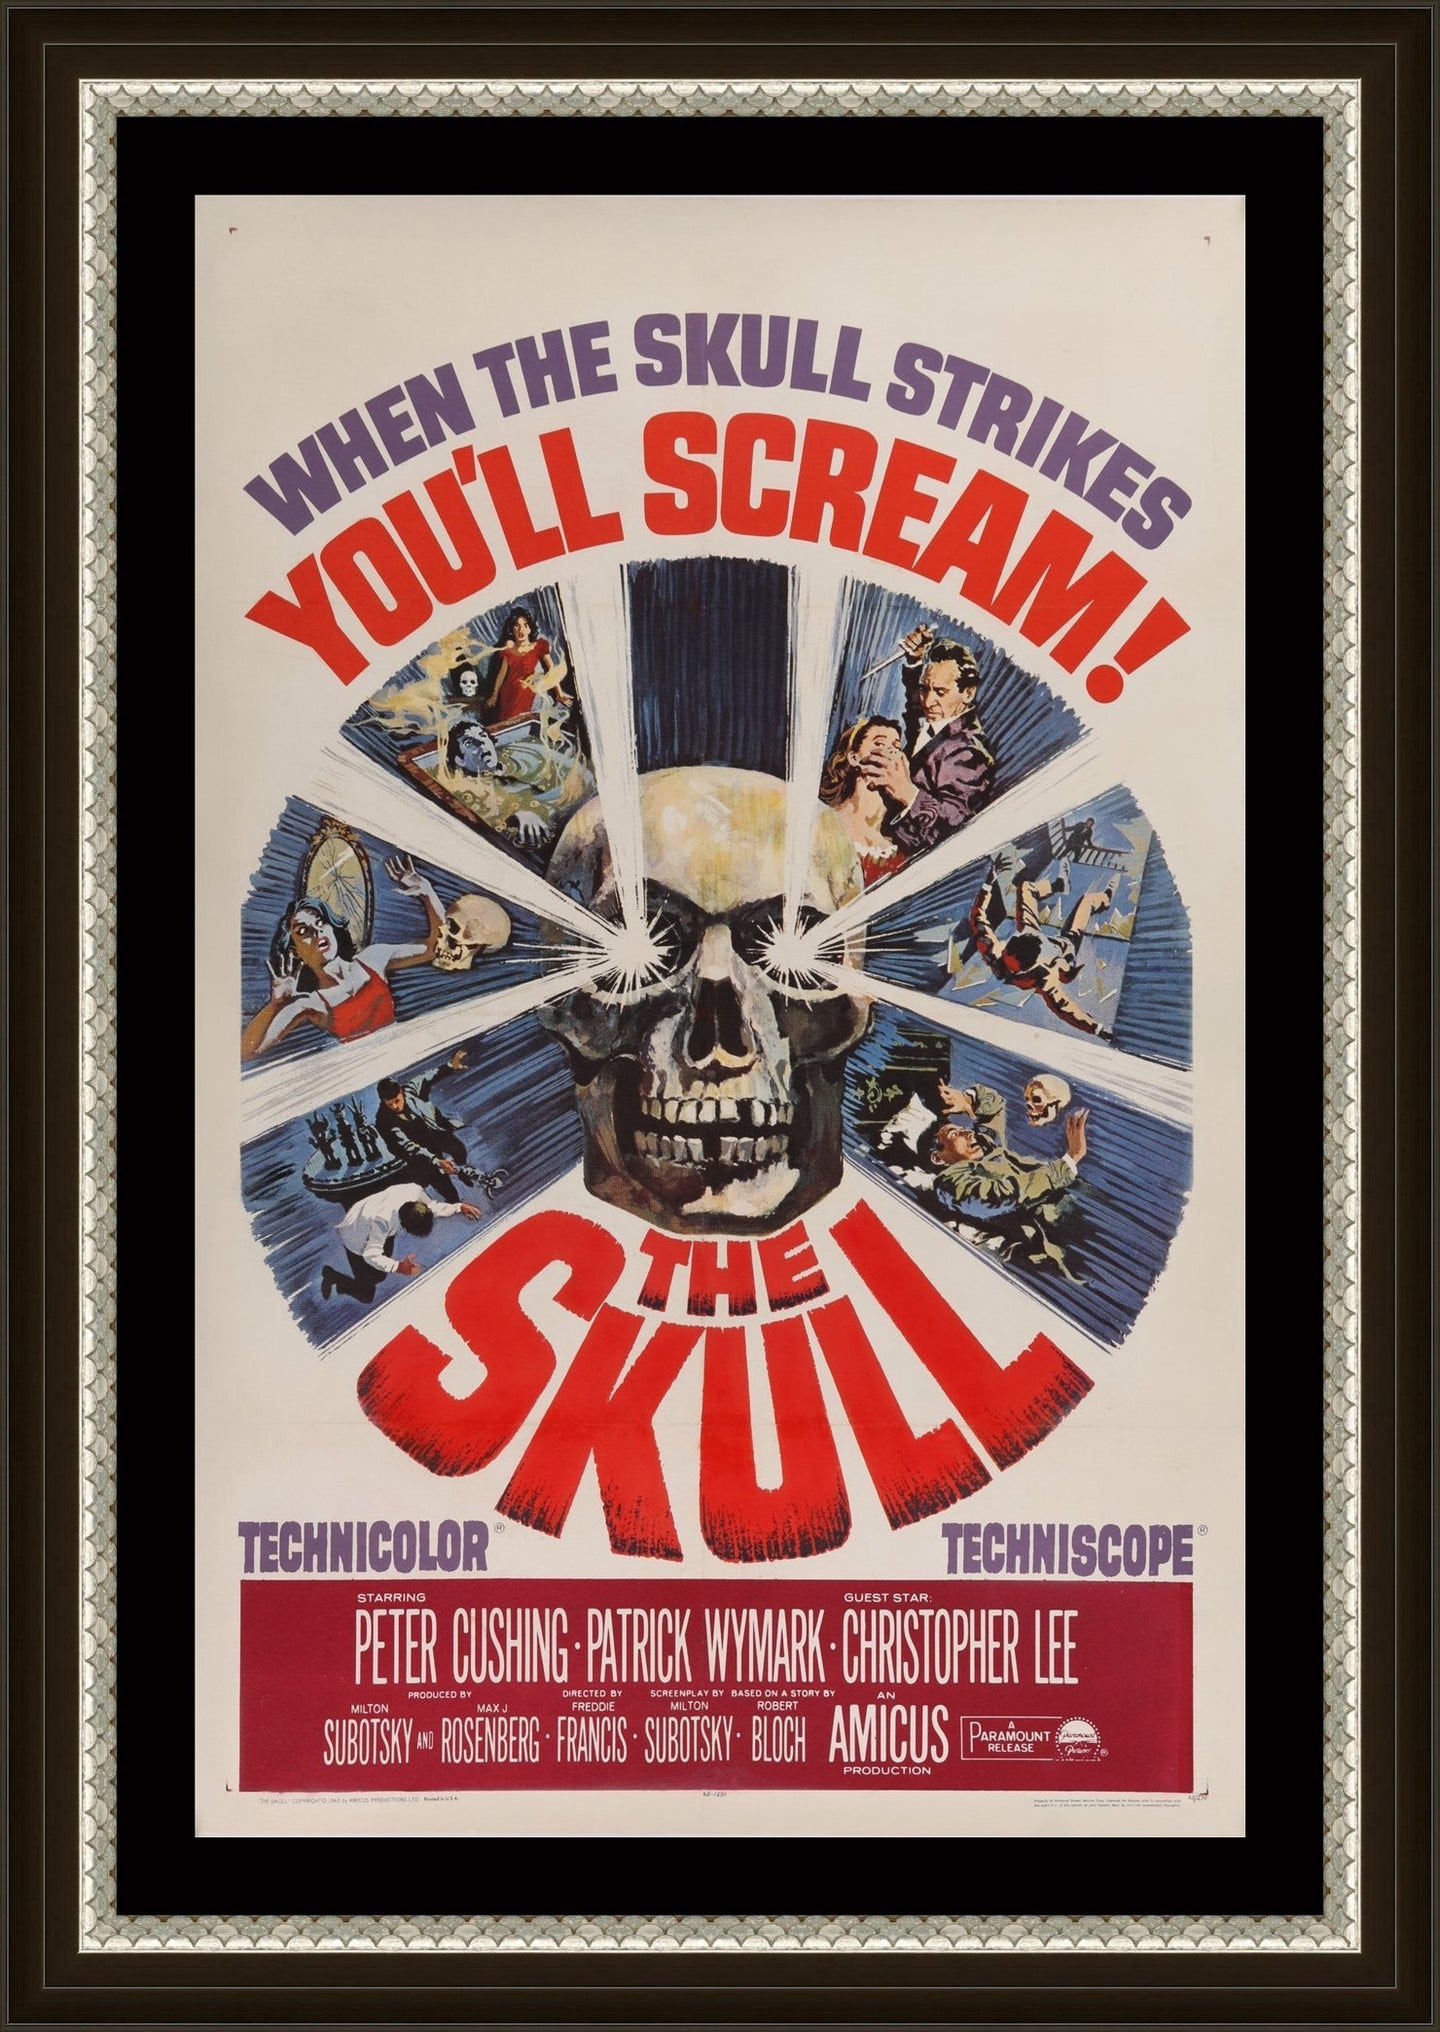 An original movie poster for the horror film The Skull